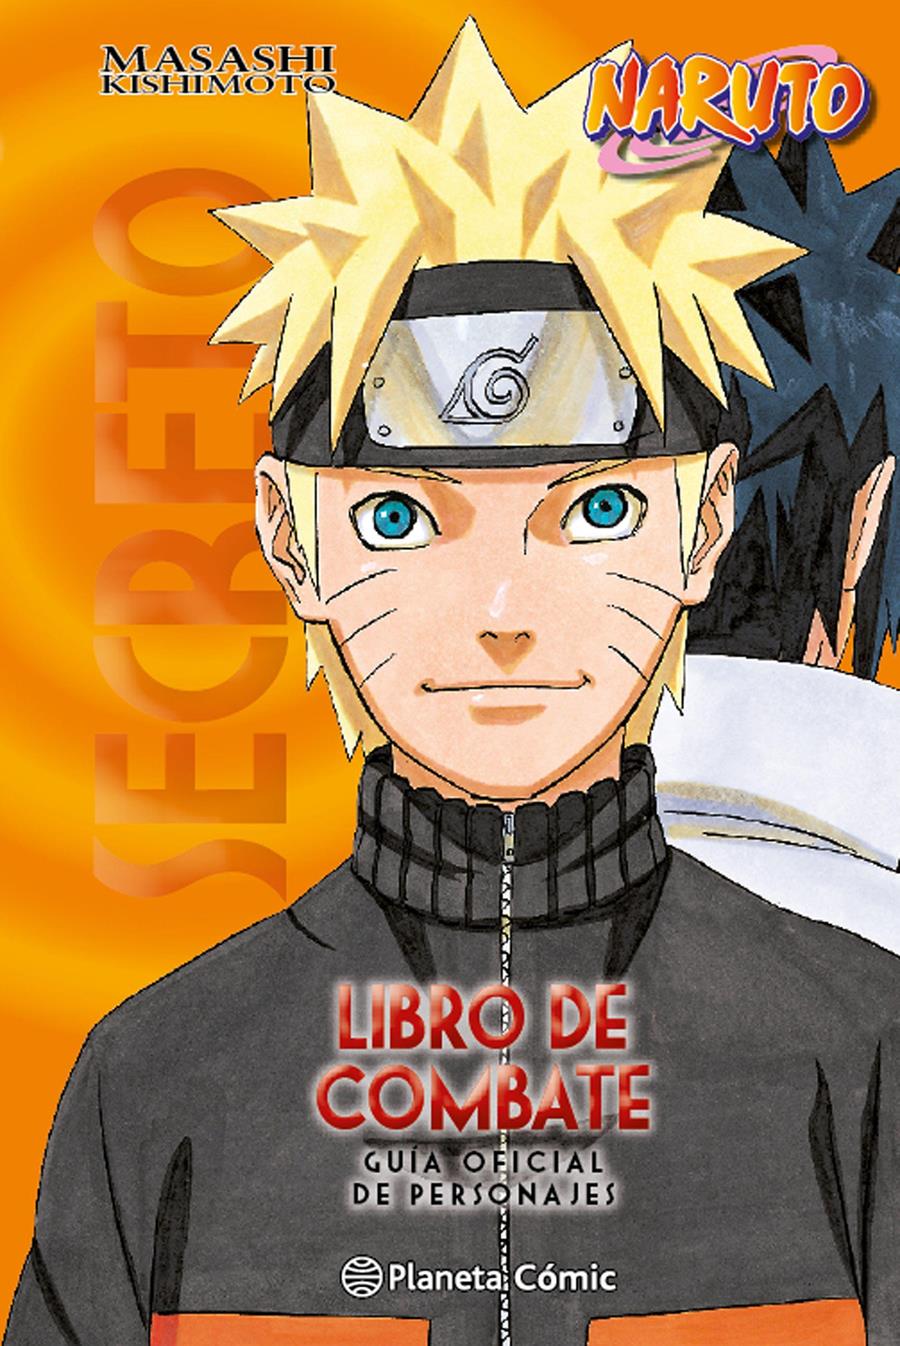 Naruto Guía nº 04 Libro de combate | N1017M-PLA16 | Masashi Kishimoto | Terra de Còmic - Tu tienda de cómics online especializada en cómics, manga y merchandising